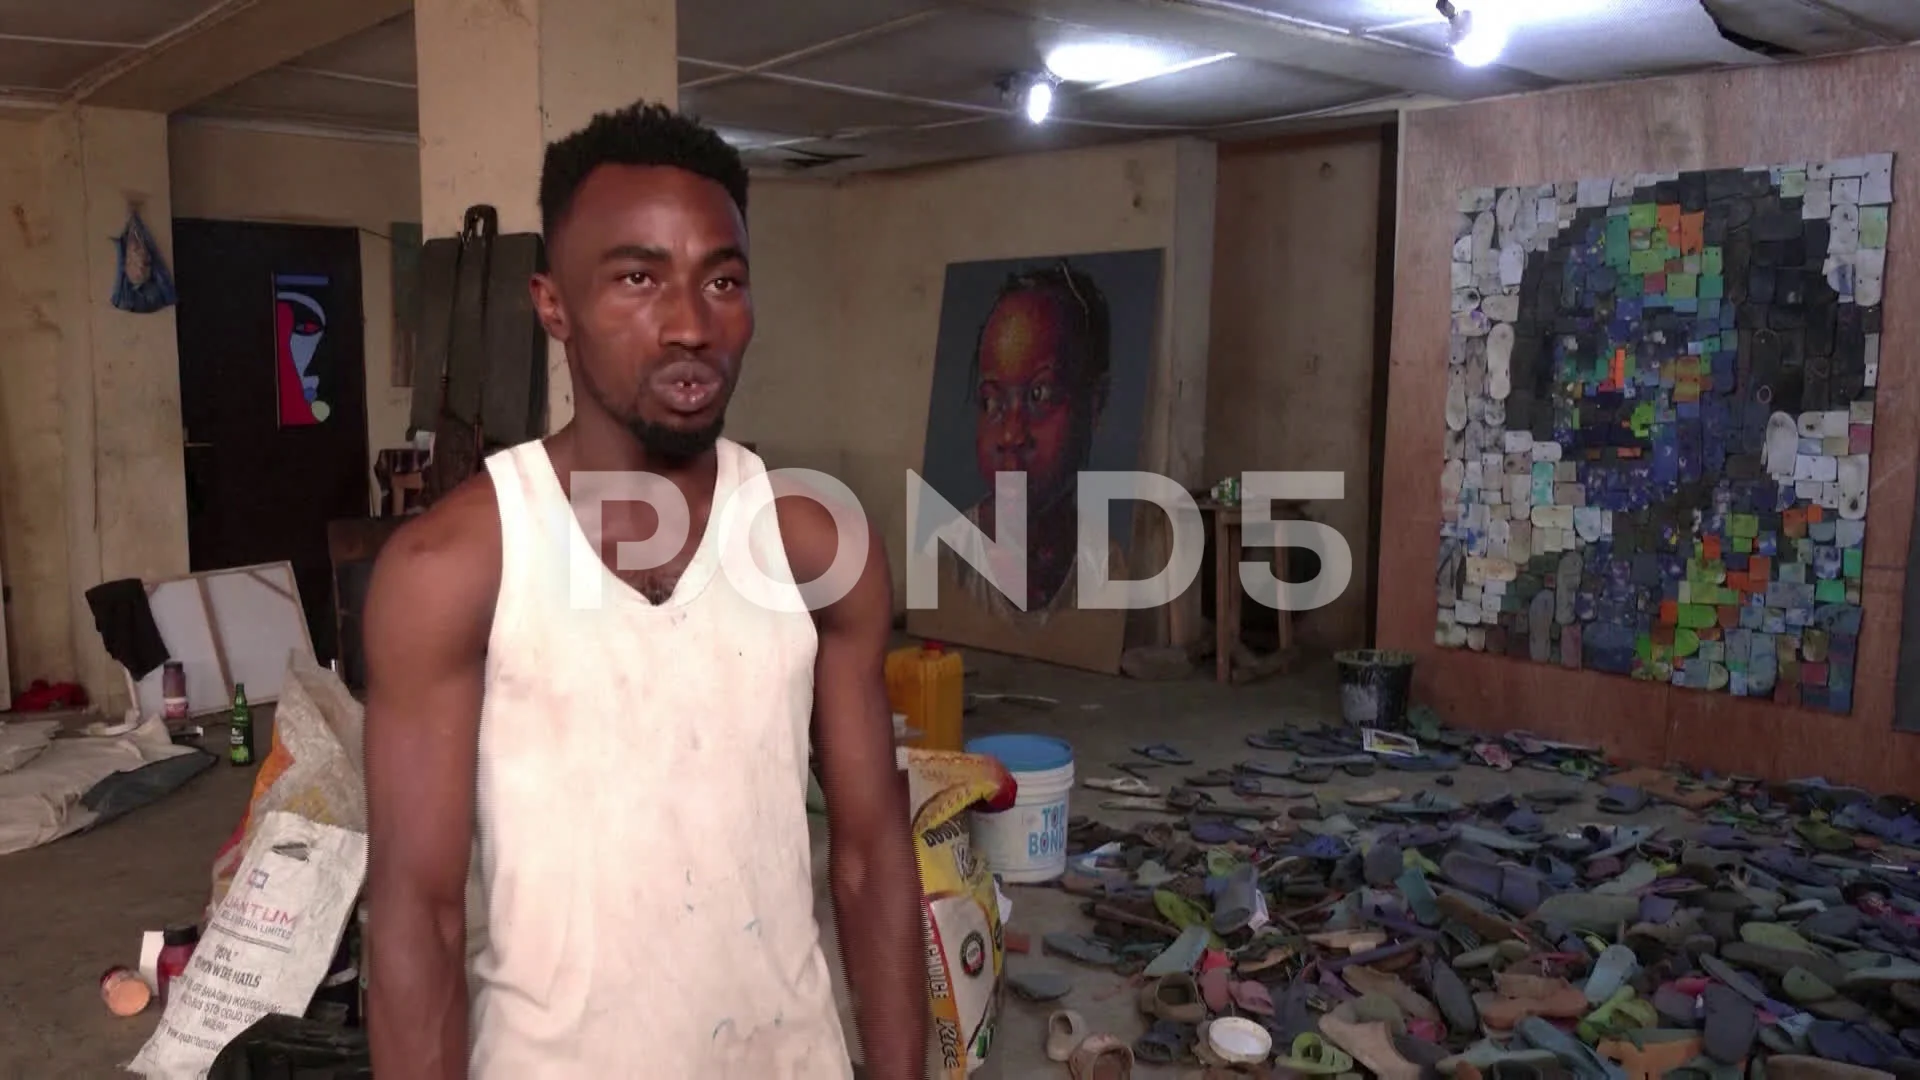 Eco-friendly Nigerian artist turns plastic flip-flops into portraits